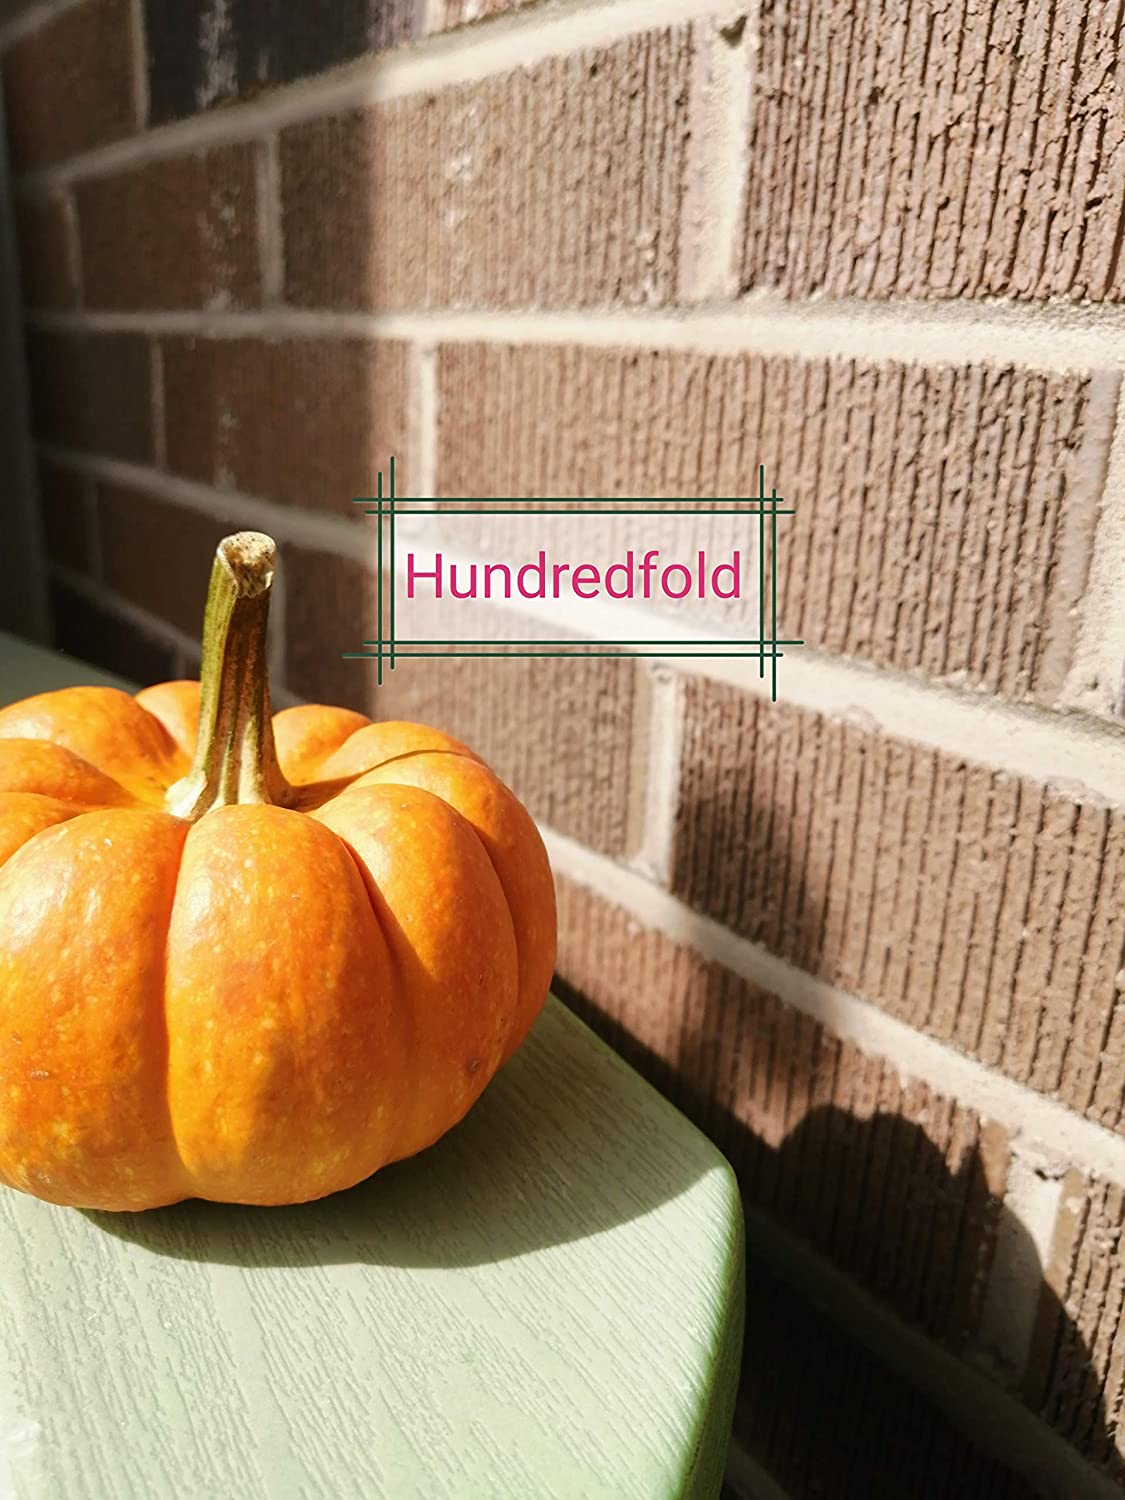 Hundredfold Jack Be Little Miniature Pumpkin 30 Seeds to Plant – Cucurbita Pepo Non-GMO Baby Pumpkin for Decoration or Eating, Children’s Garden